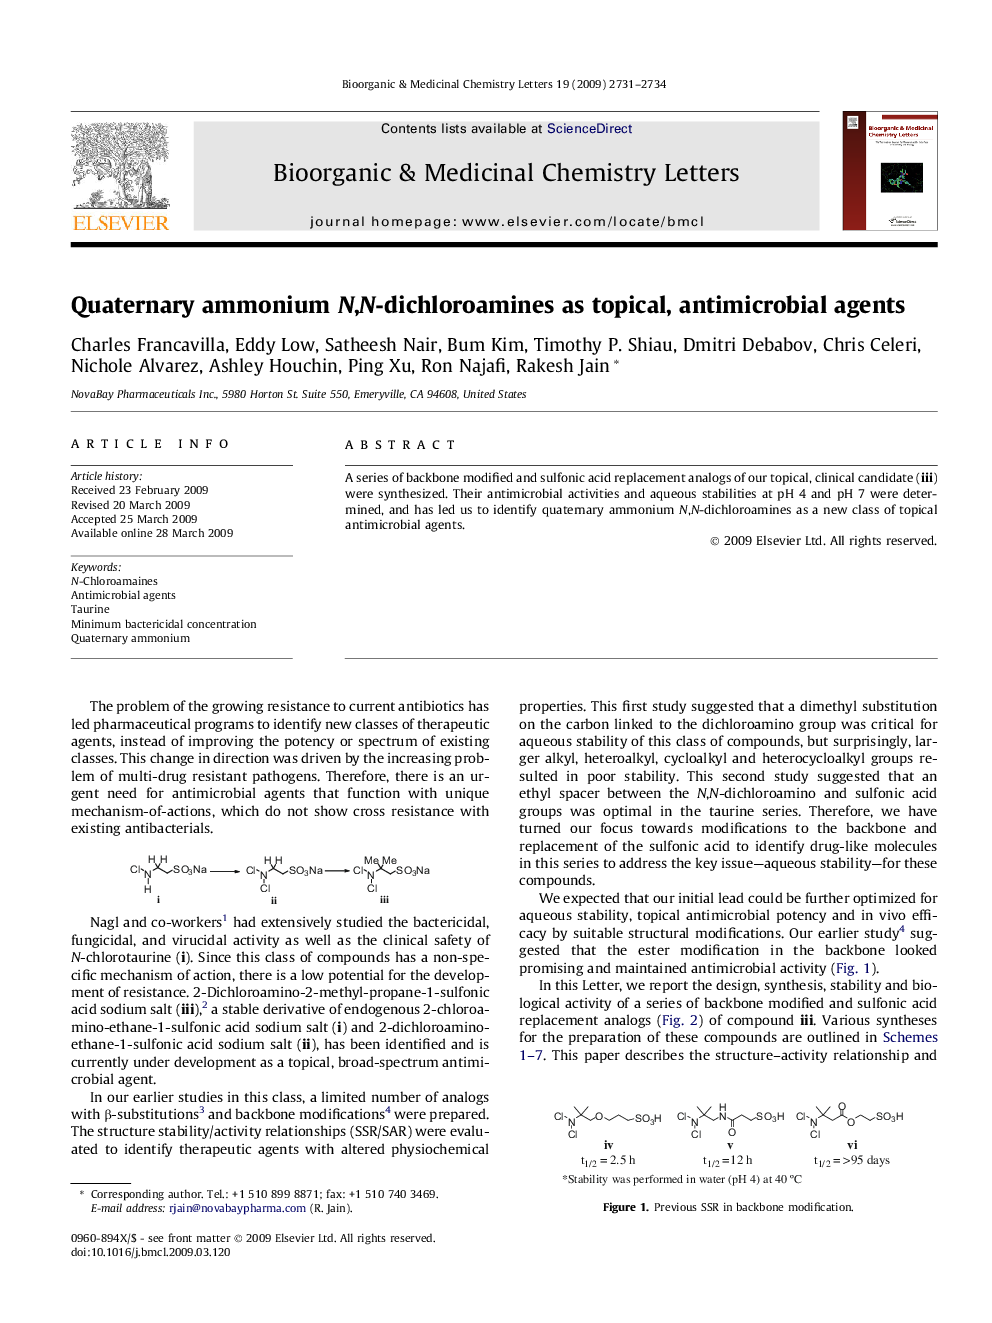 Quaternary ammonium N,N-dichloroamines as topical, antimicrobial agents